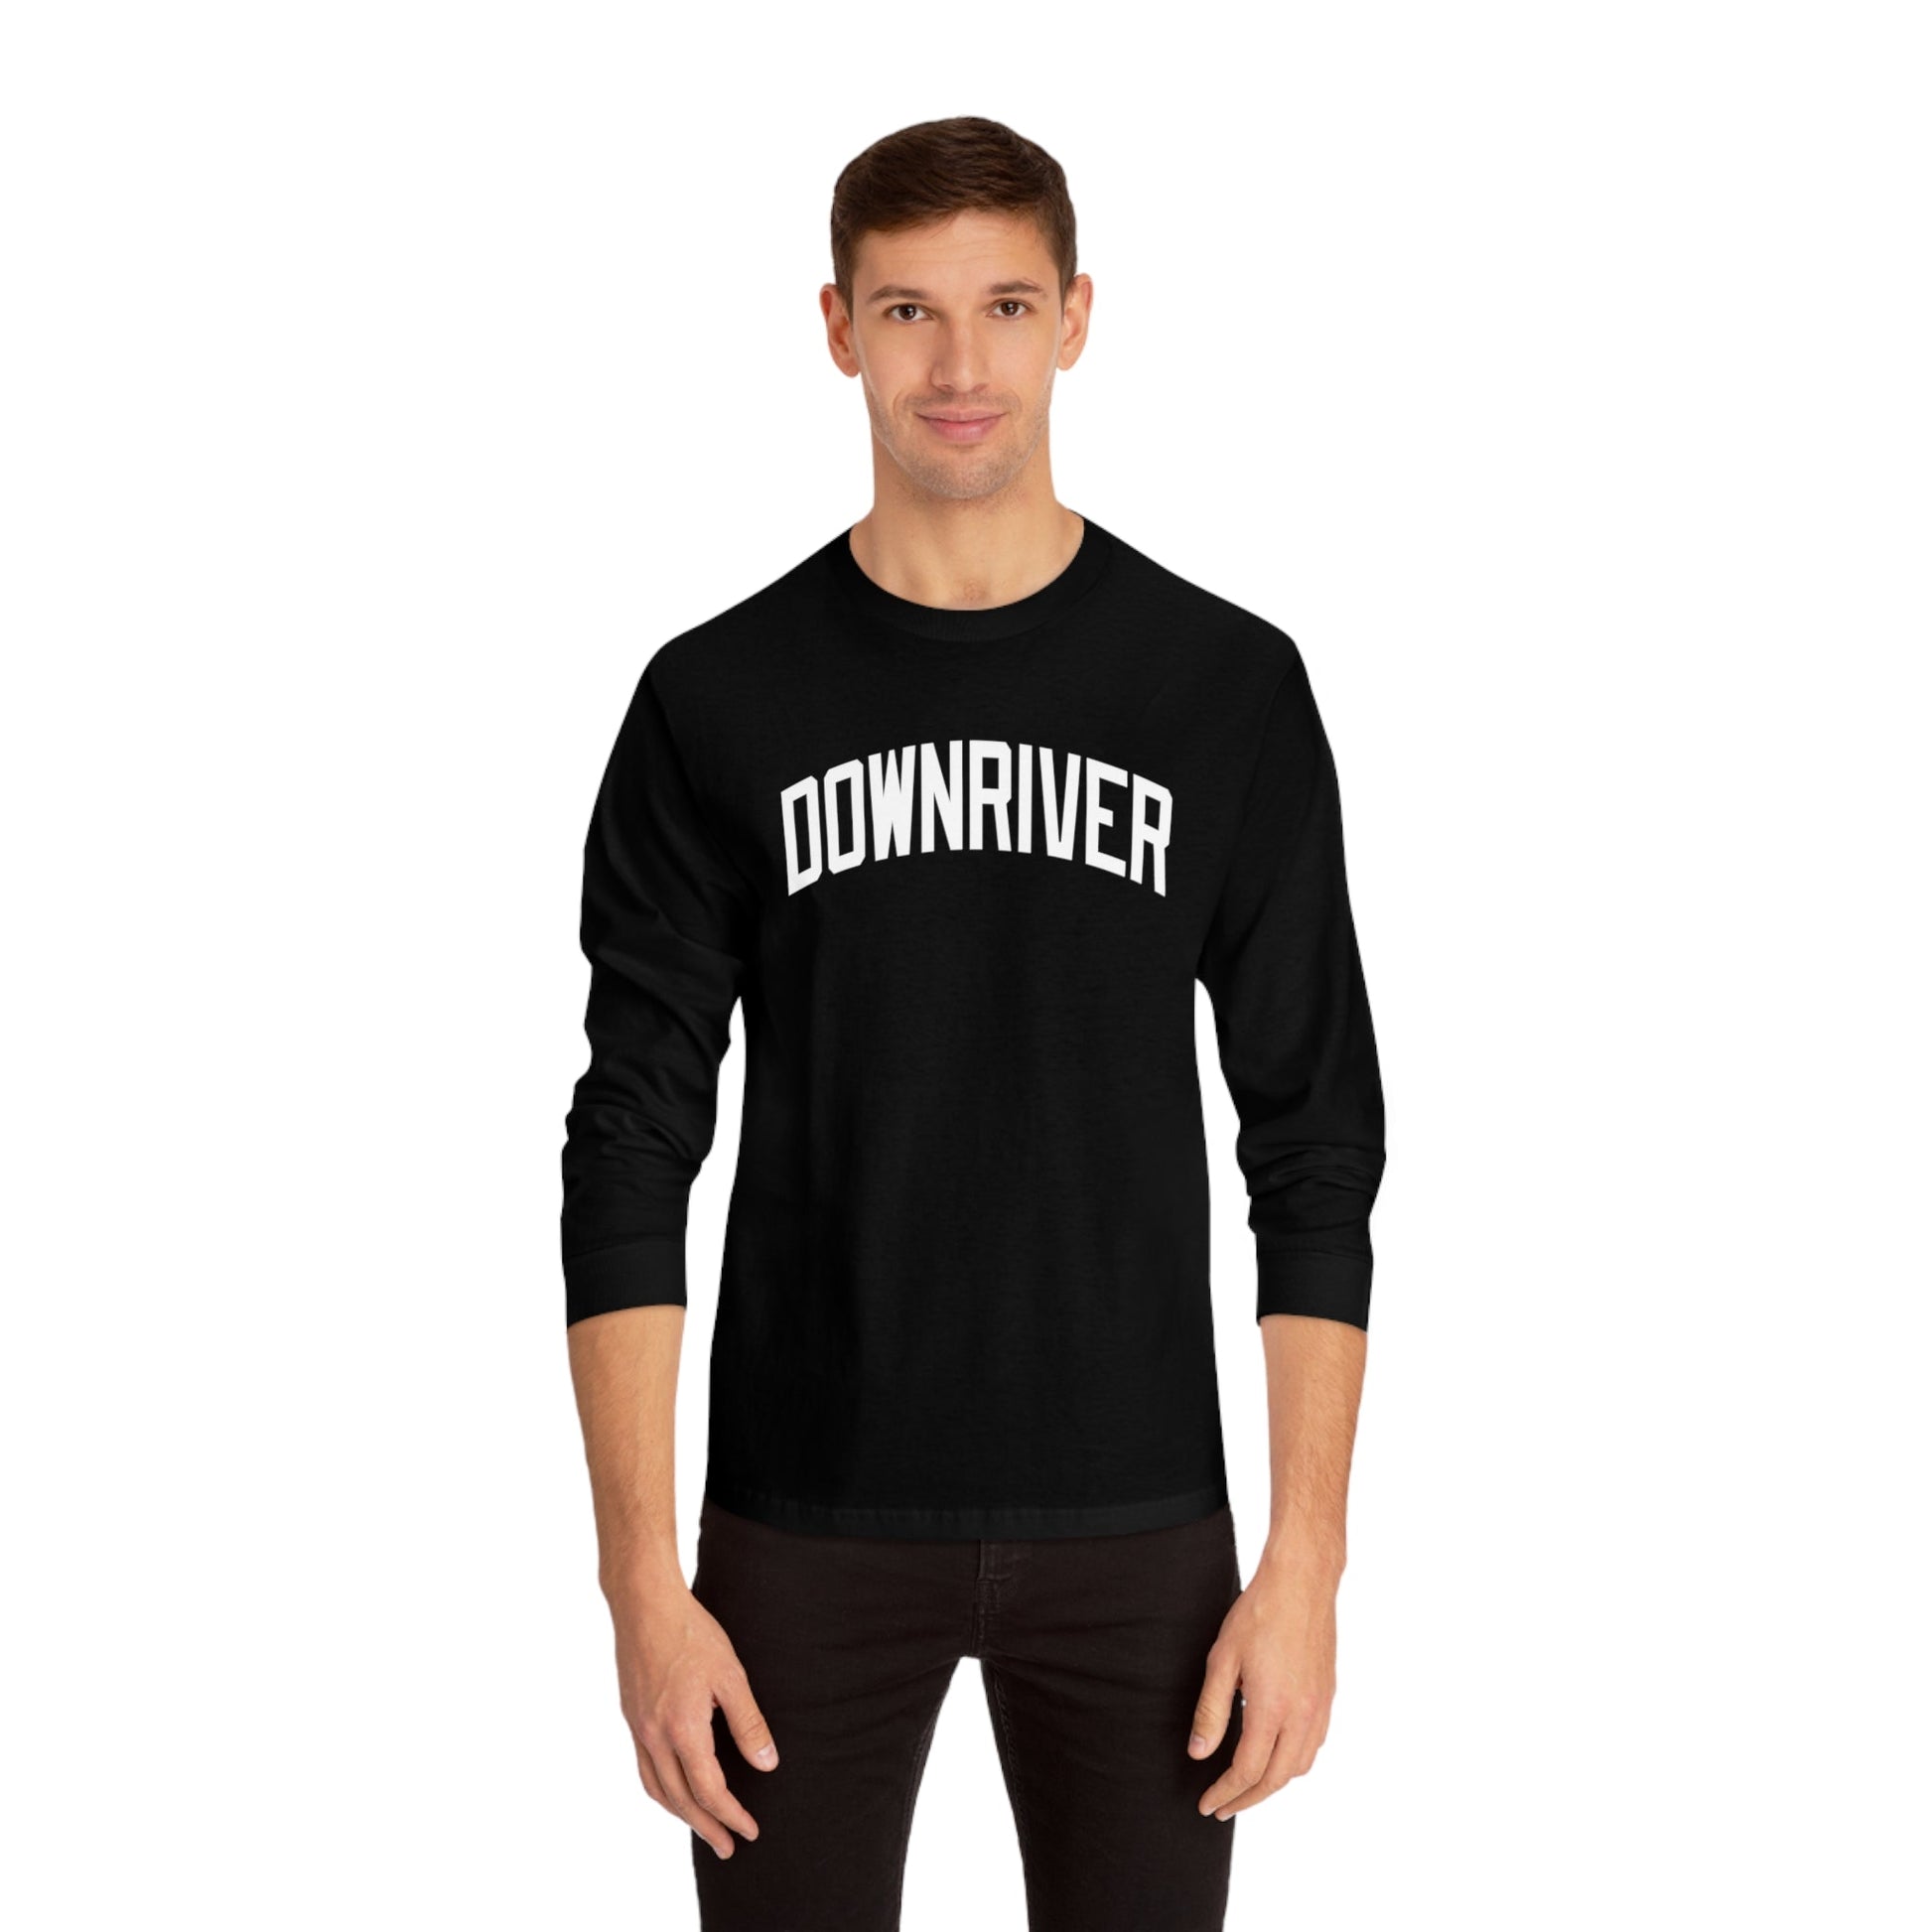 Downriver 83 Hockey Heavyweight Long Sleeve T Shirt | Downriver Clothing Apparel | Detroit Michigan | Downriver World